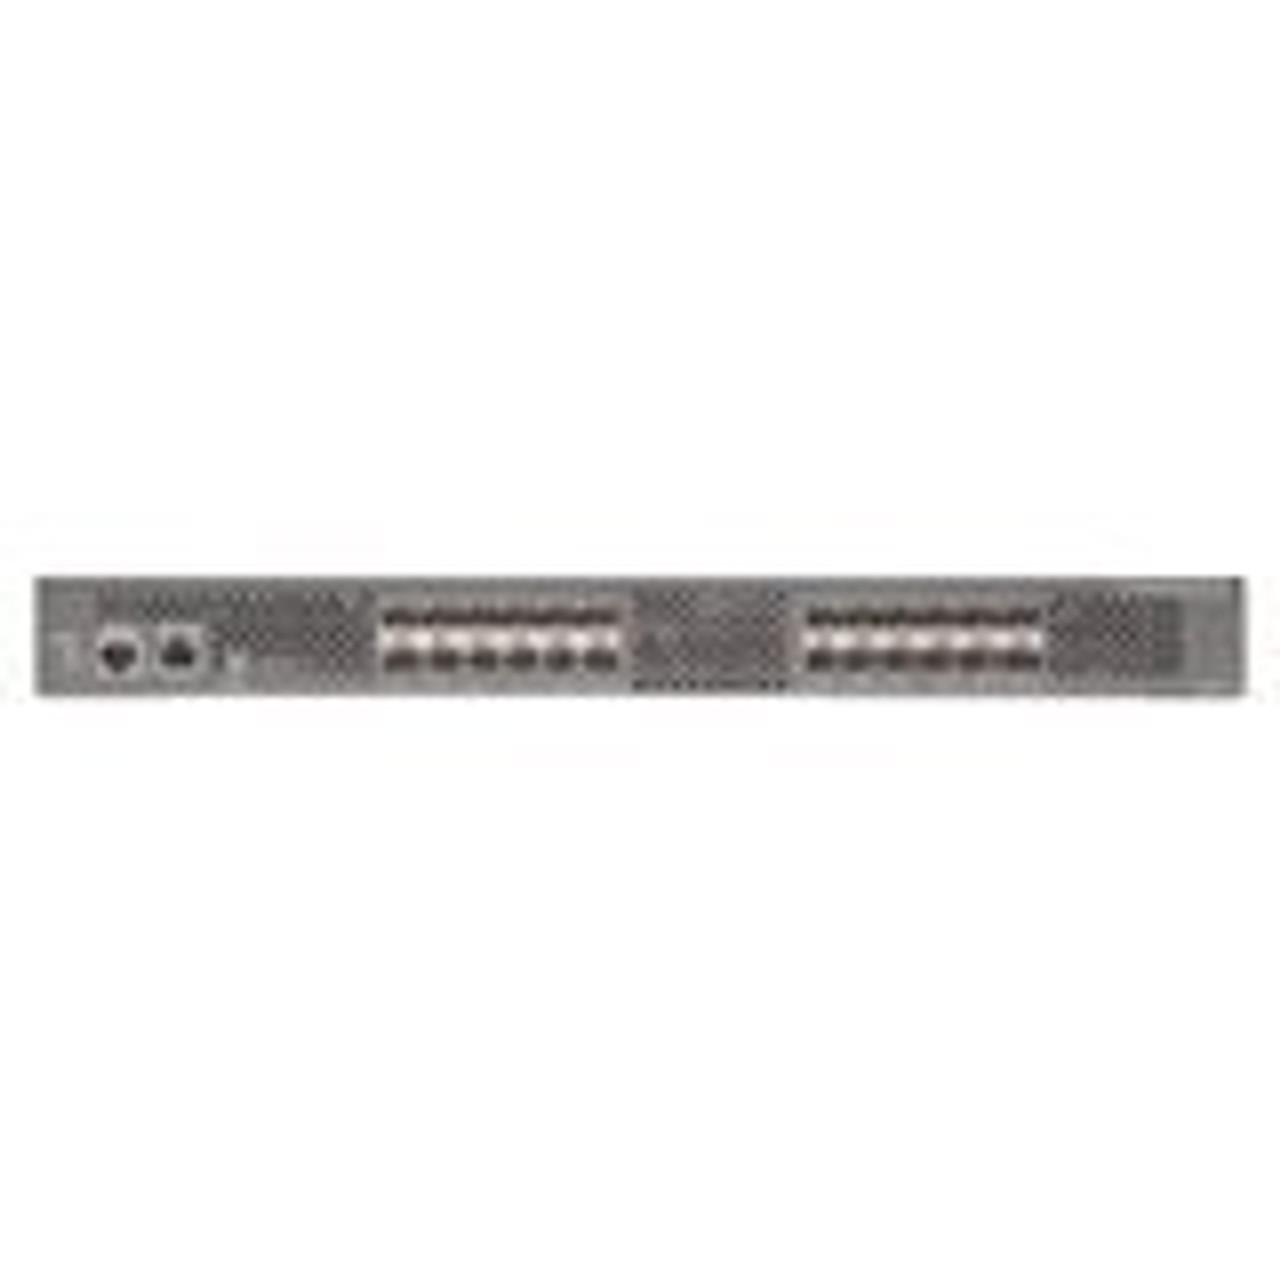 MDS-9124 EMC MDS 9124 24-Ports SFP Fiber Channel Switch 1U Rack-Mountable (Refurbished)